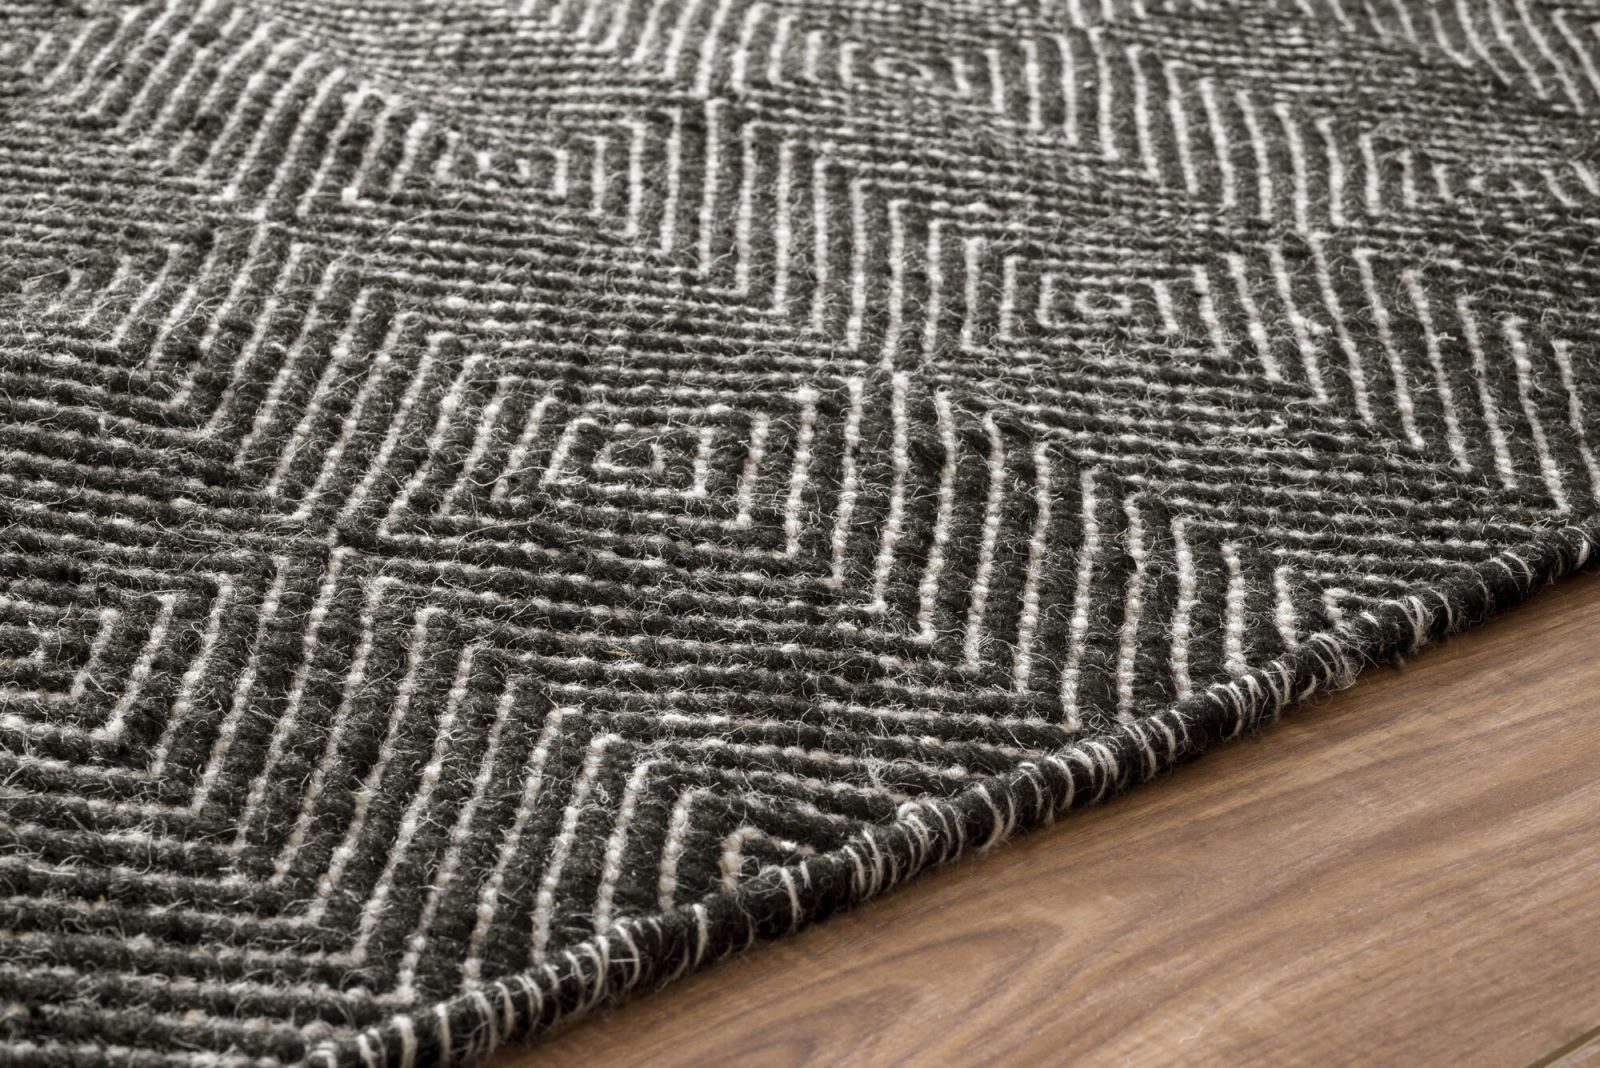 wool rug on wooden floor